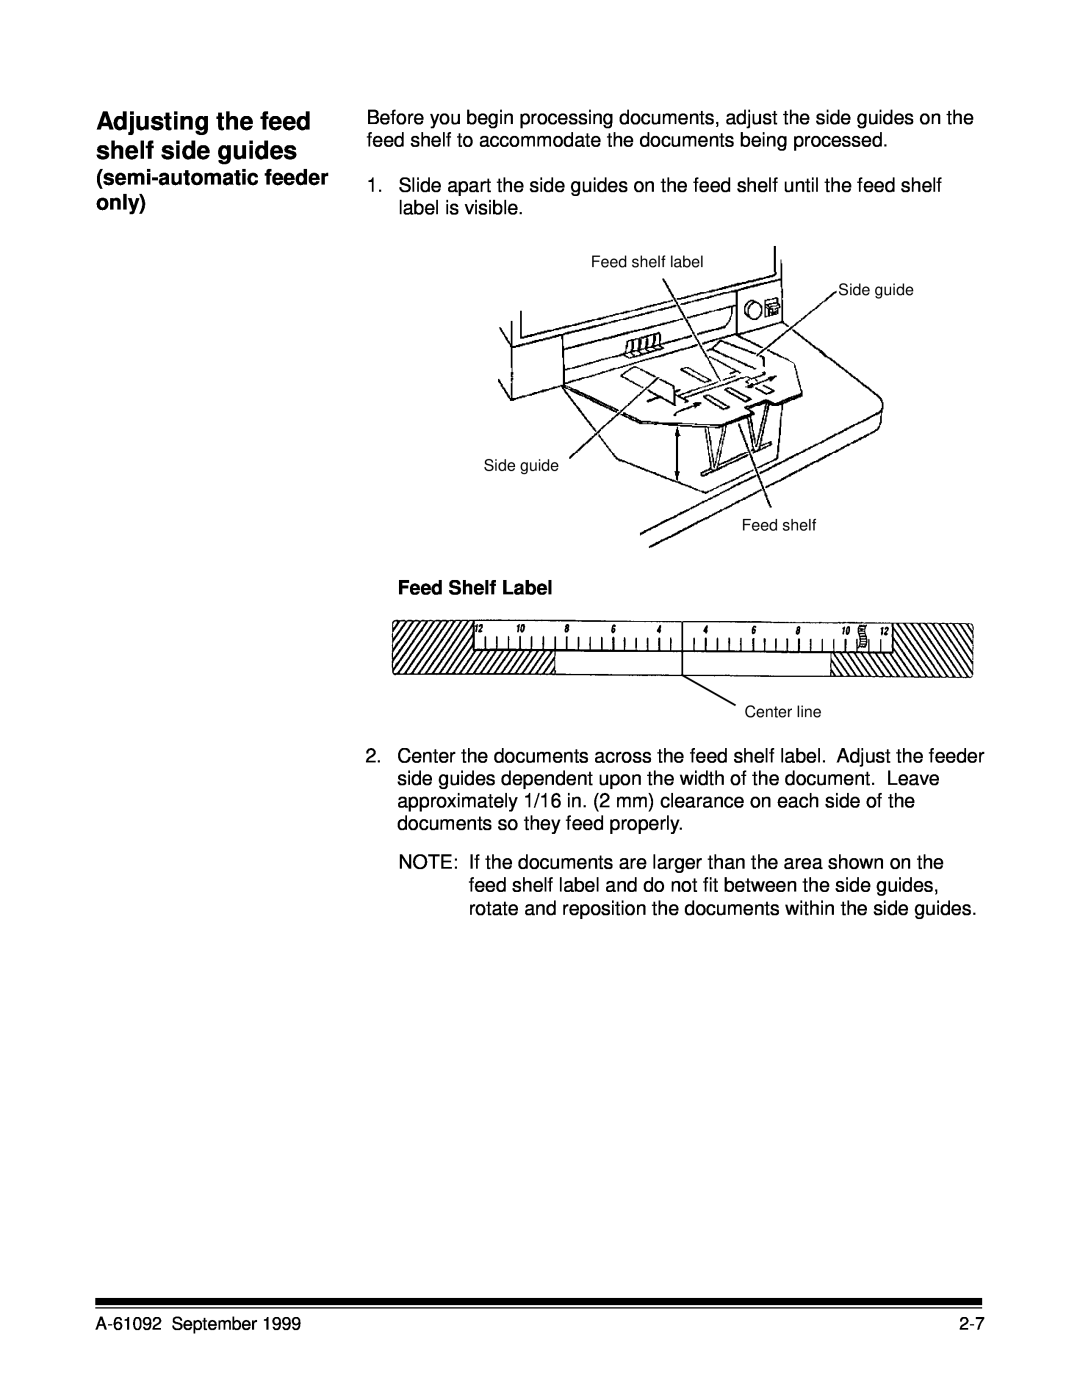 Kodak A-61092 manual Adjusting the feed shelf side guides, semi-automatic feeder only, Feed Shelf Label 